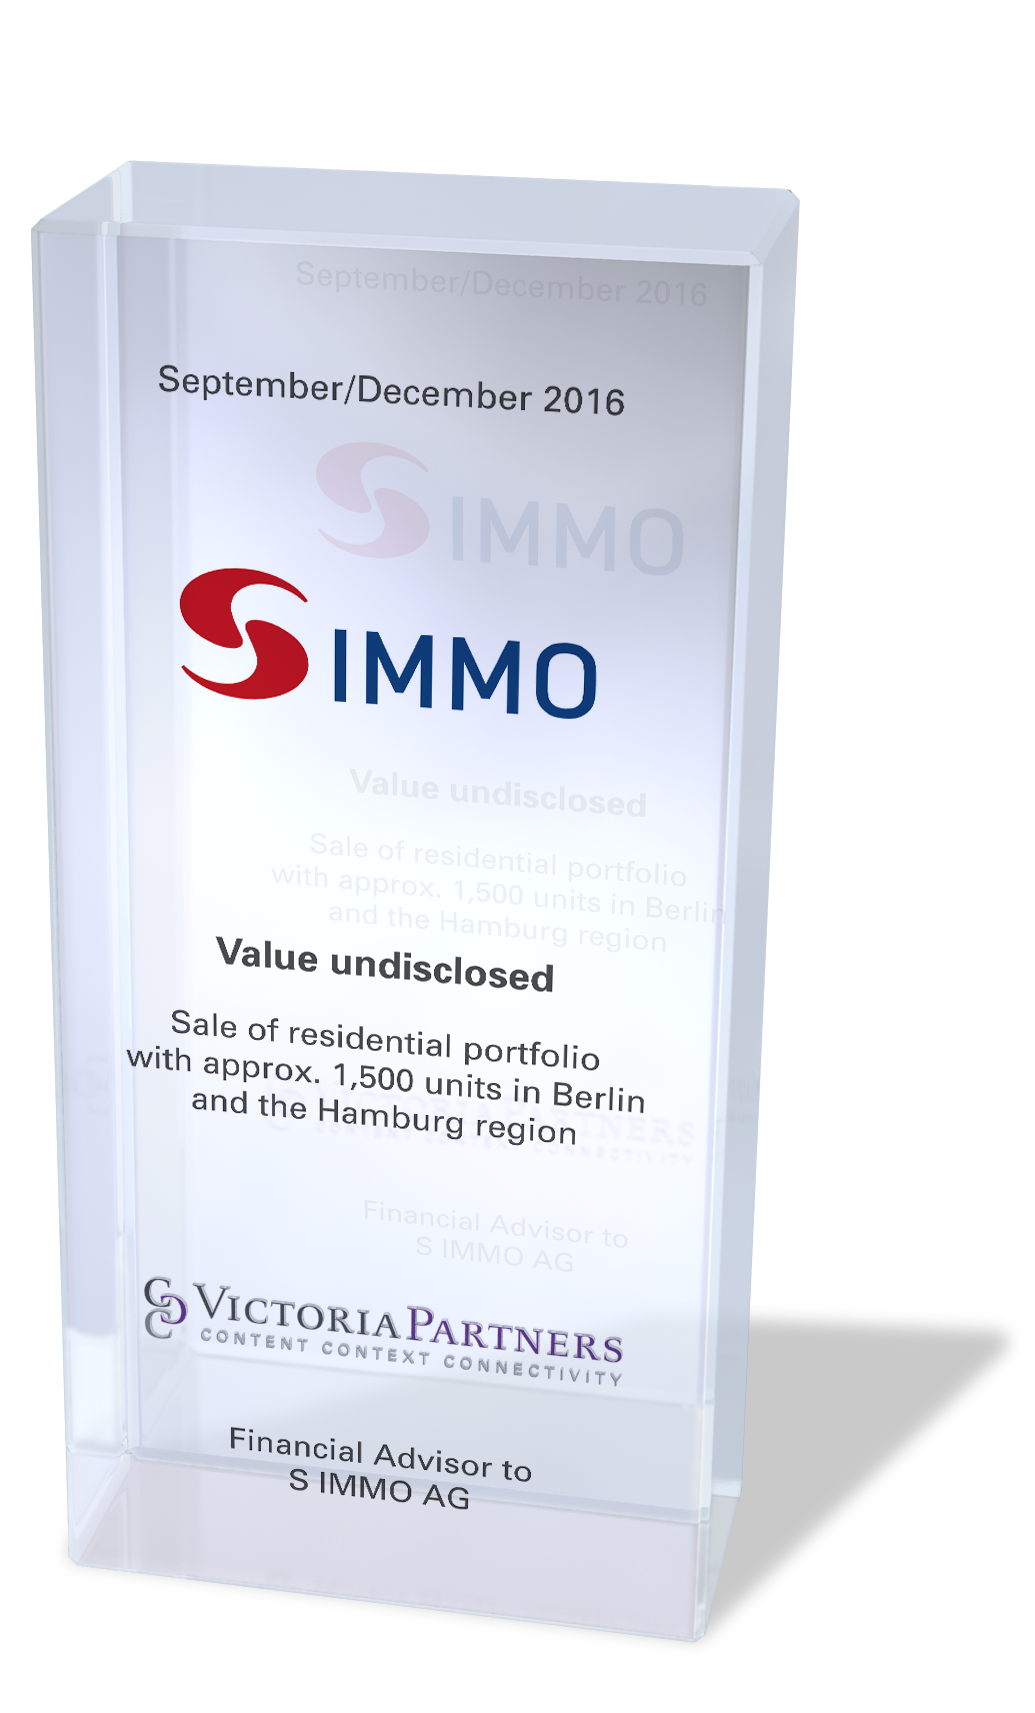 VICTORIAPARTNERS - Financial Advisor to S IMMO AG - 2016